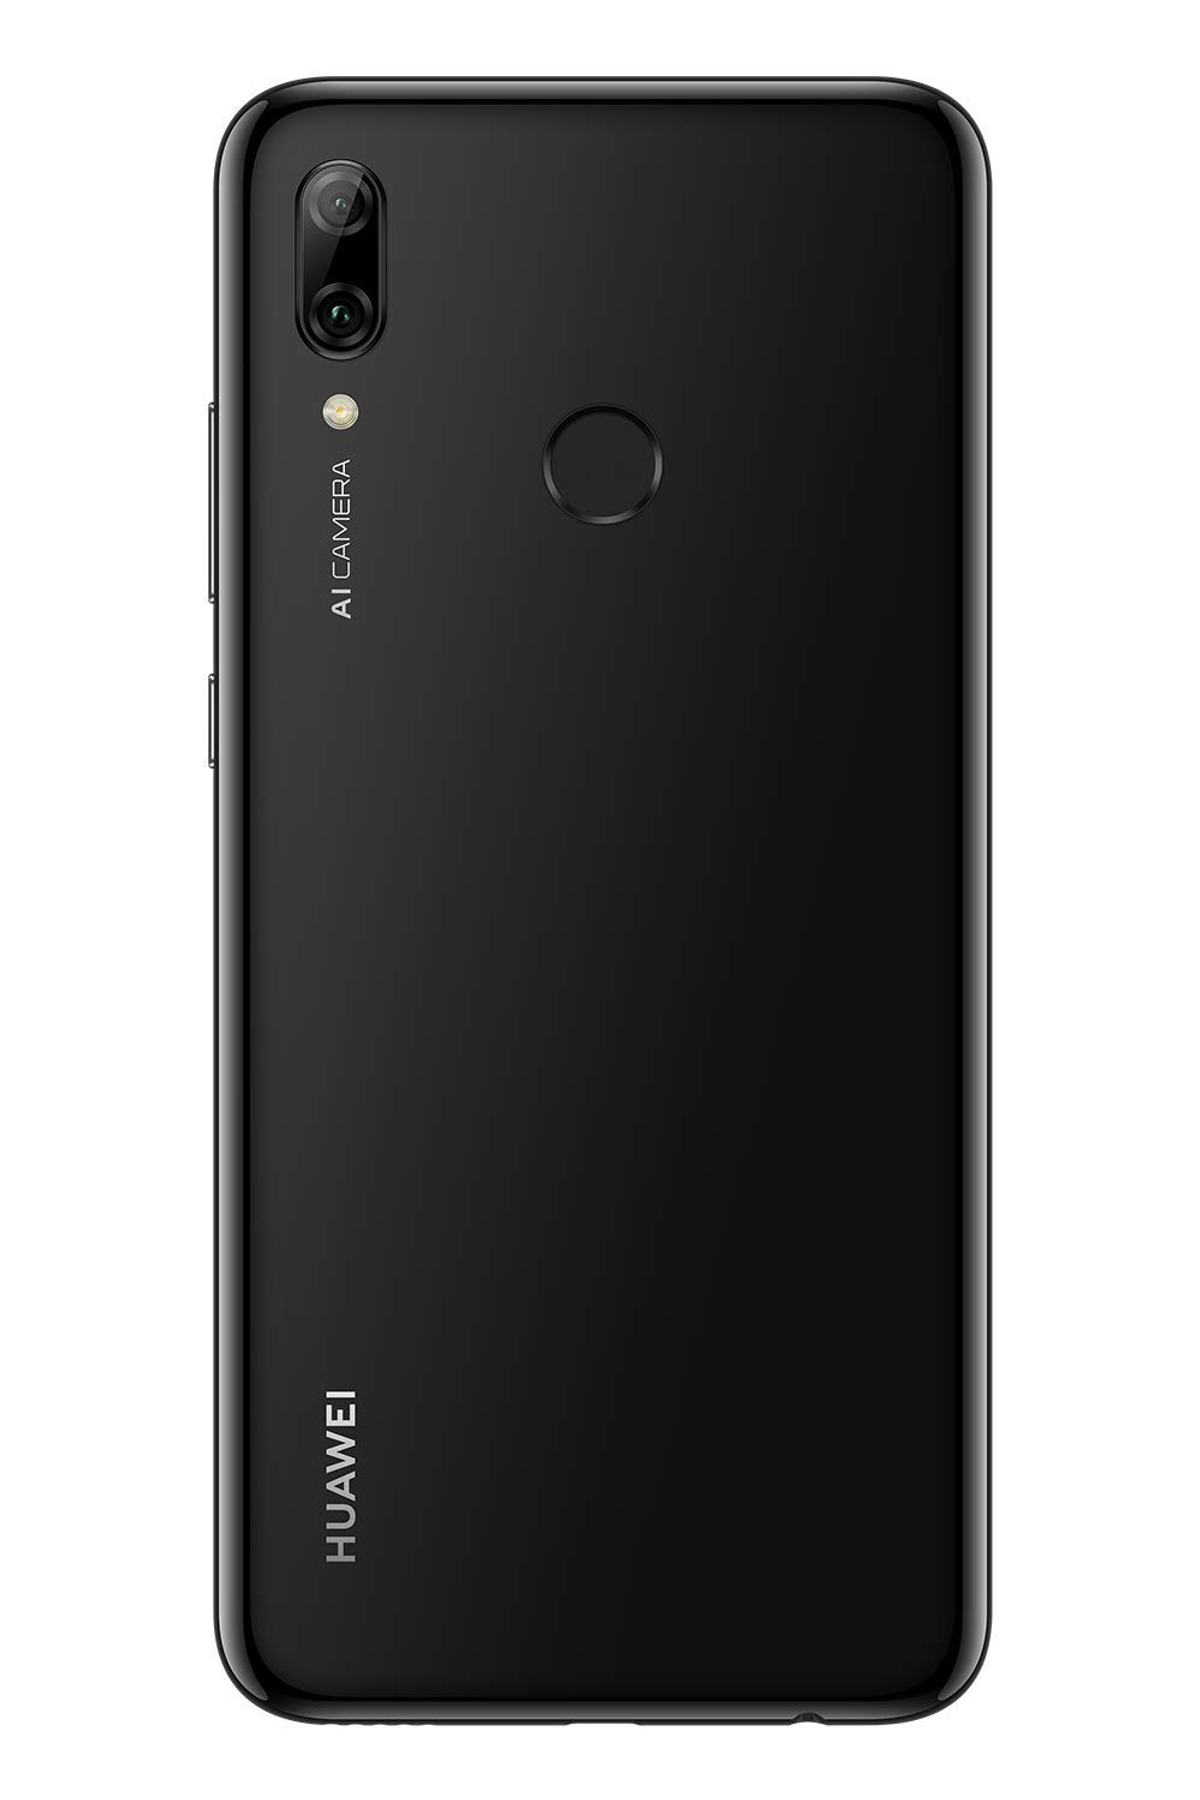 Midnight Dual P (2019) Black SIM HUAWEI 64 GB MIDNIGHT BLACK SMART